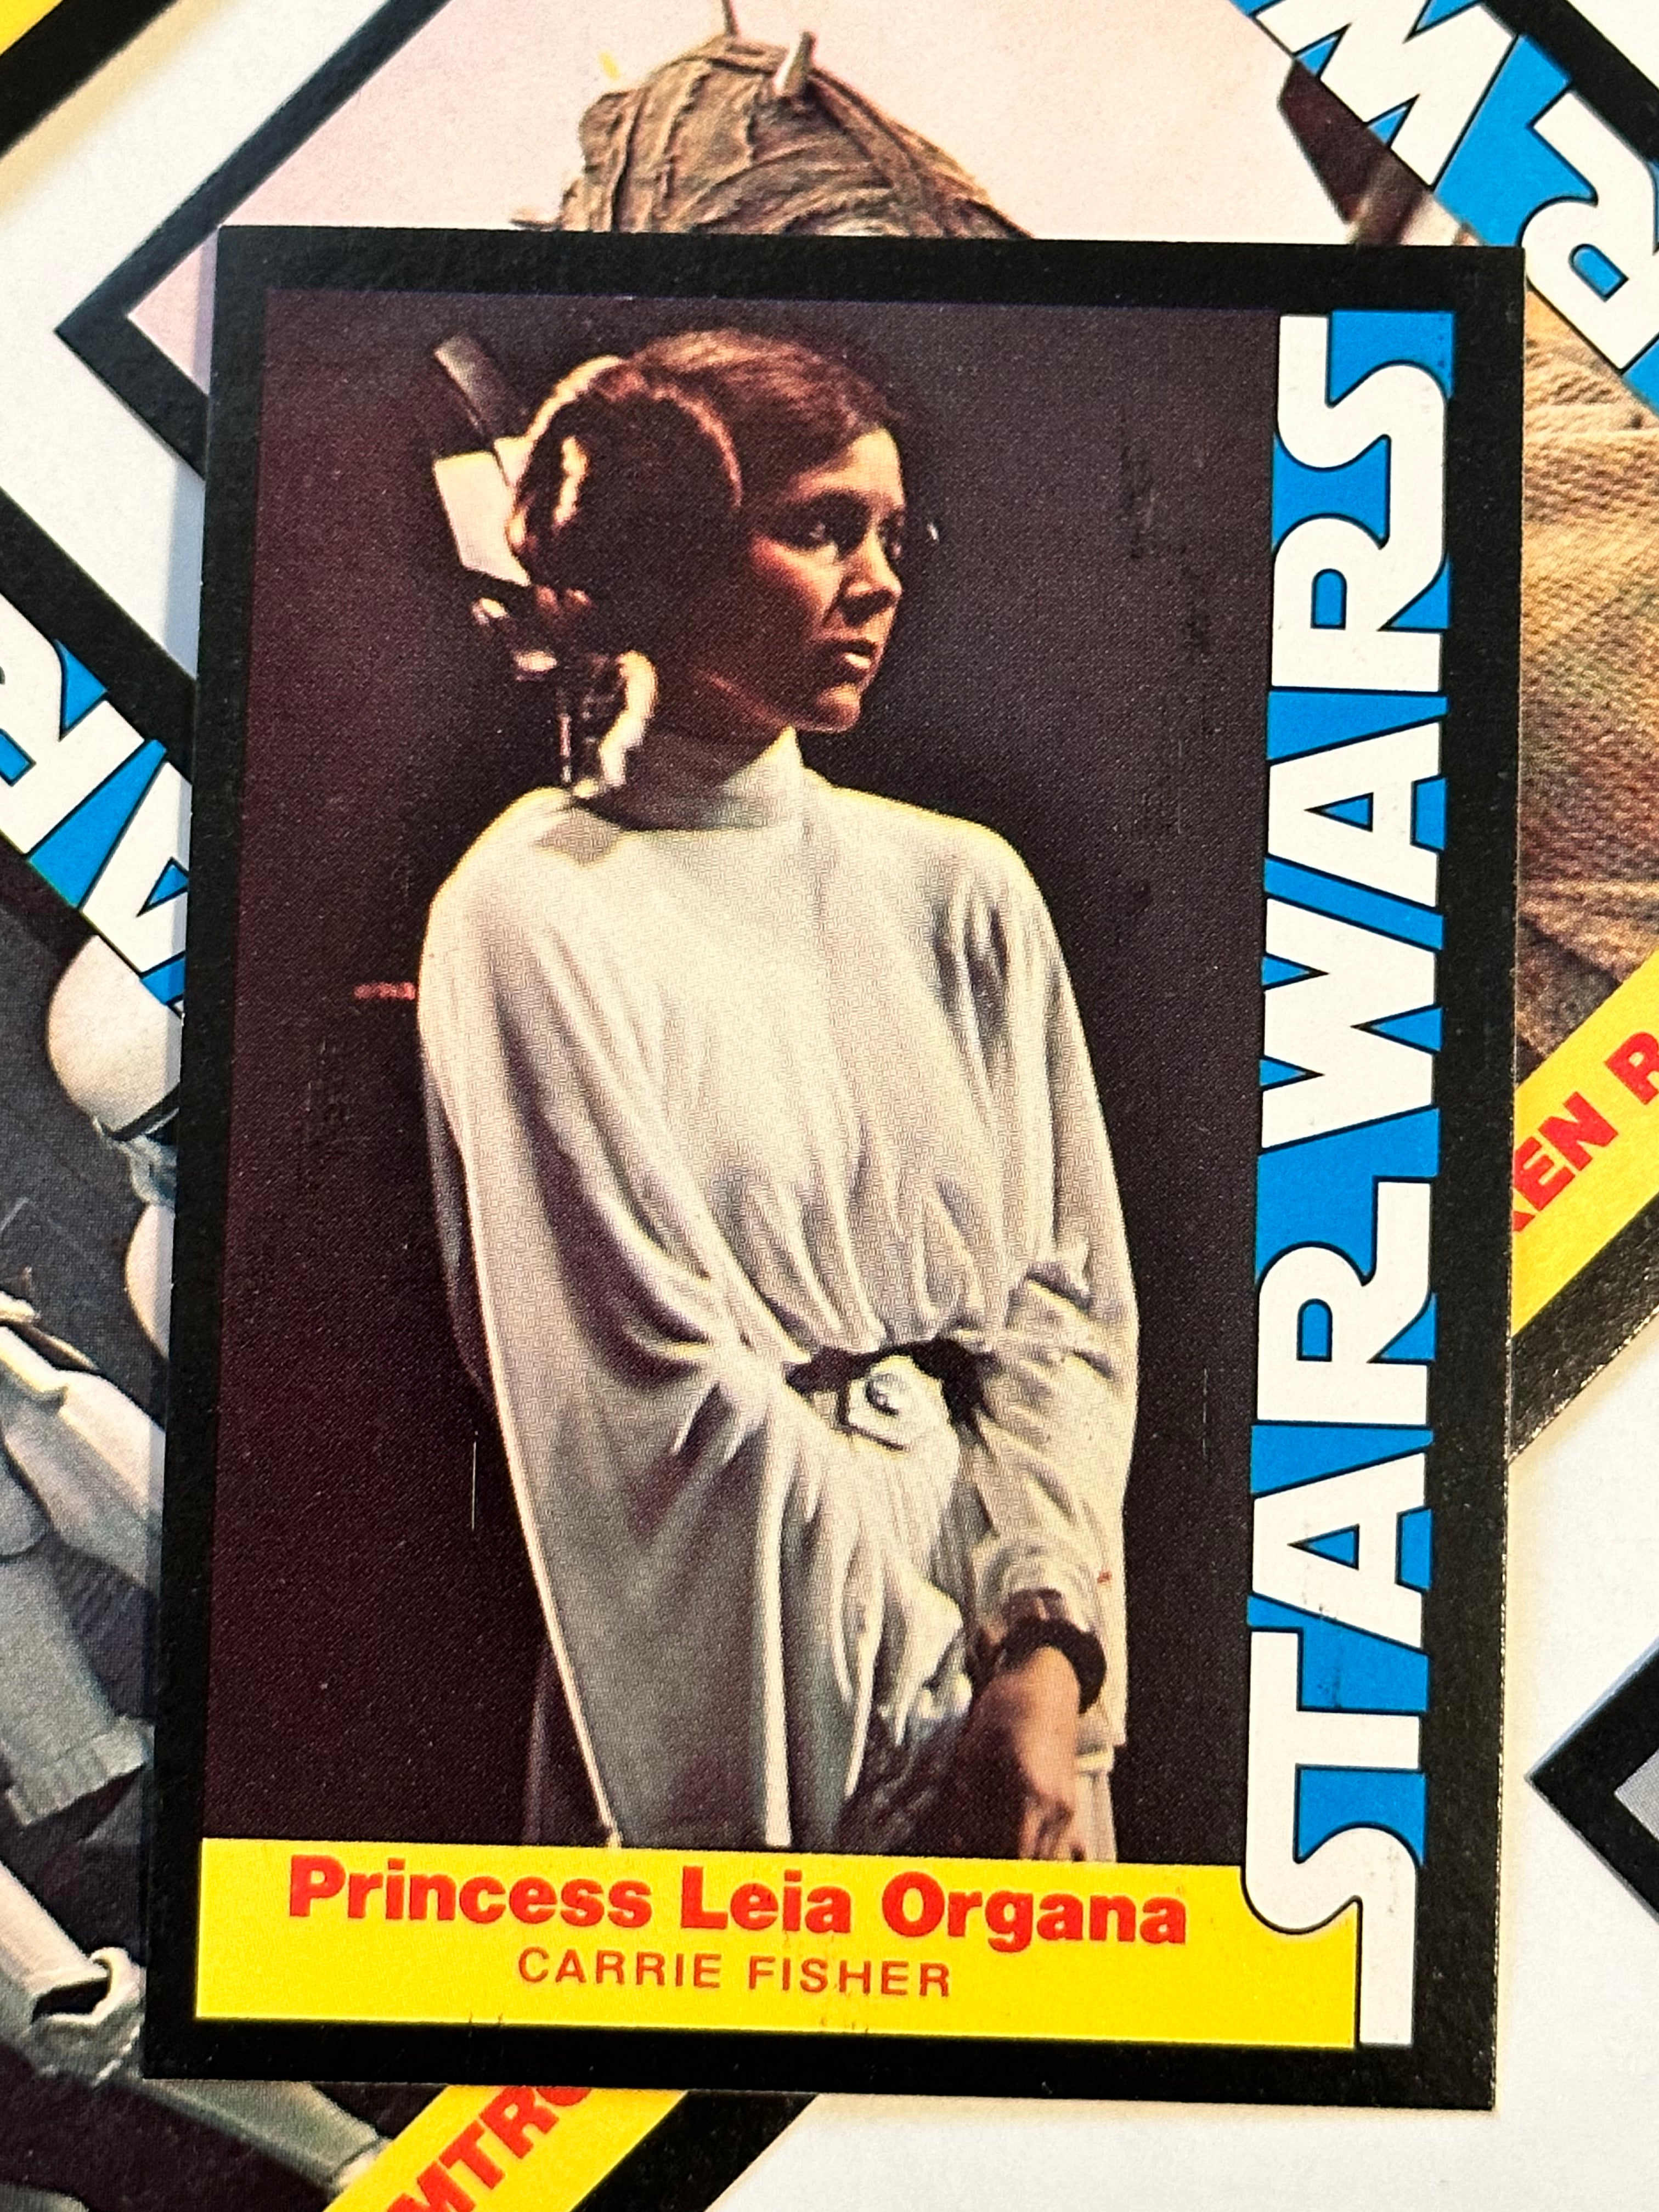 Star Wars Wonderbread rare high grade 16 cards set 1977